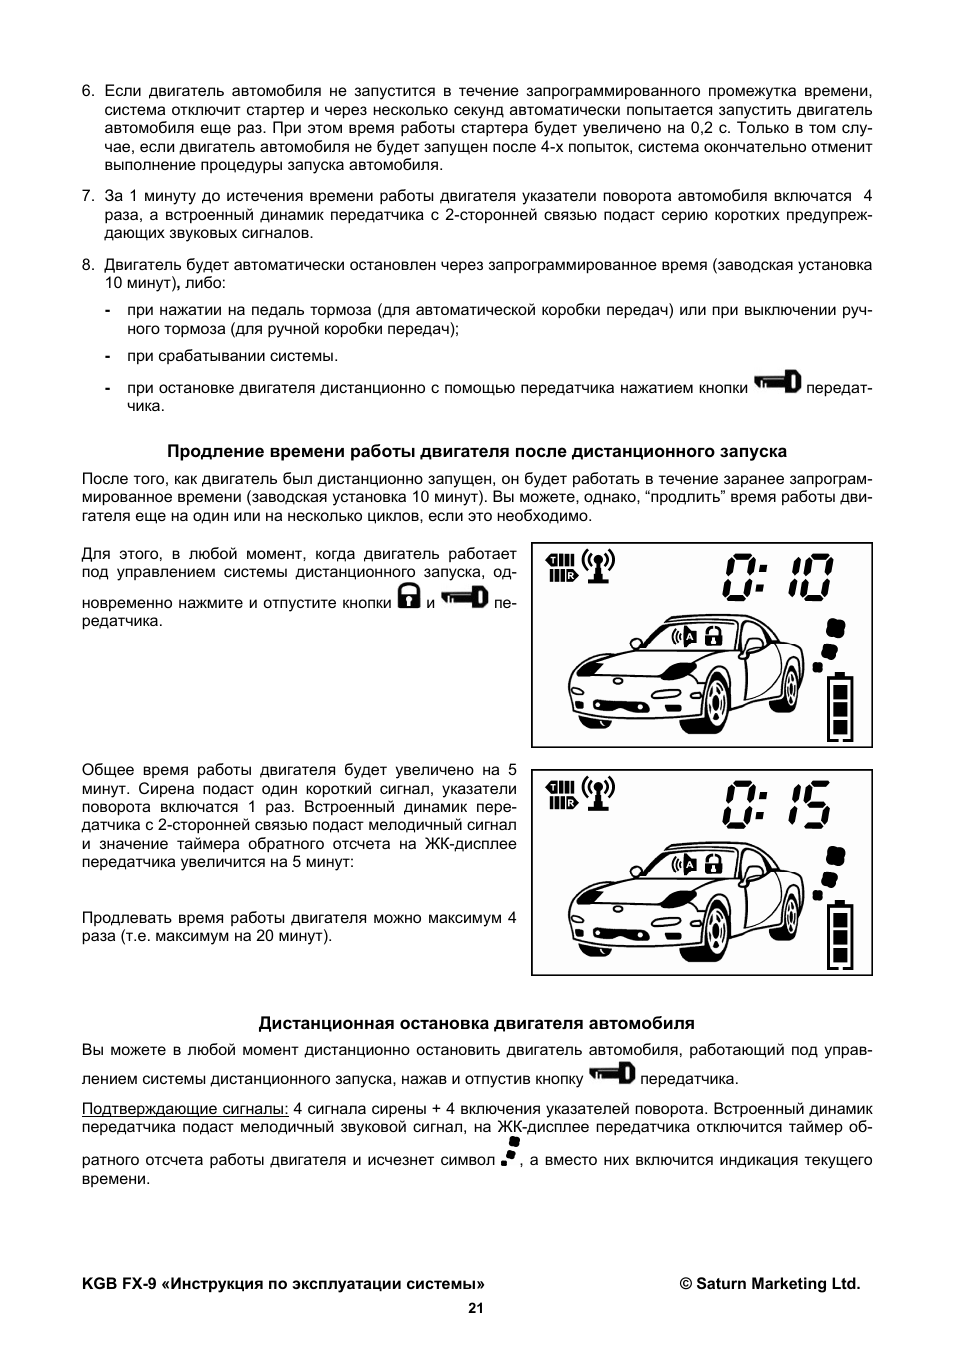 КГБ сигнализация с автозапуском инструкция по автозапуску